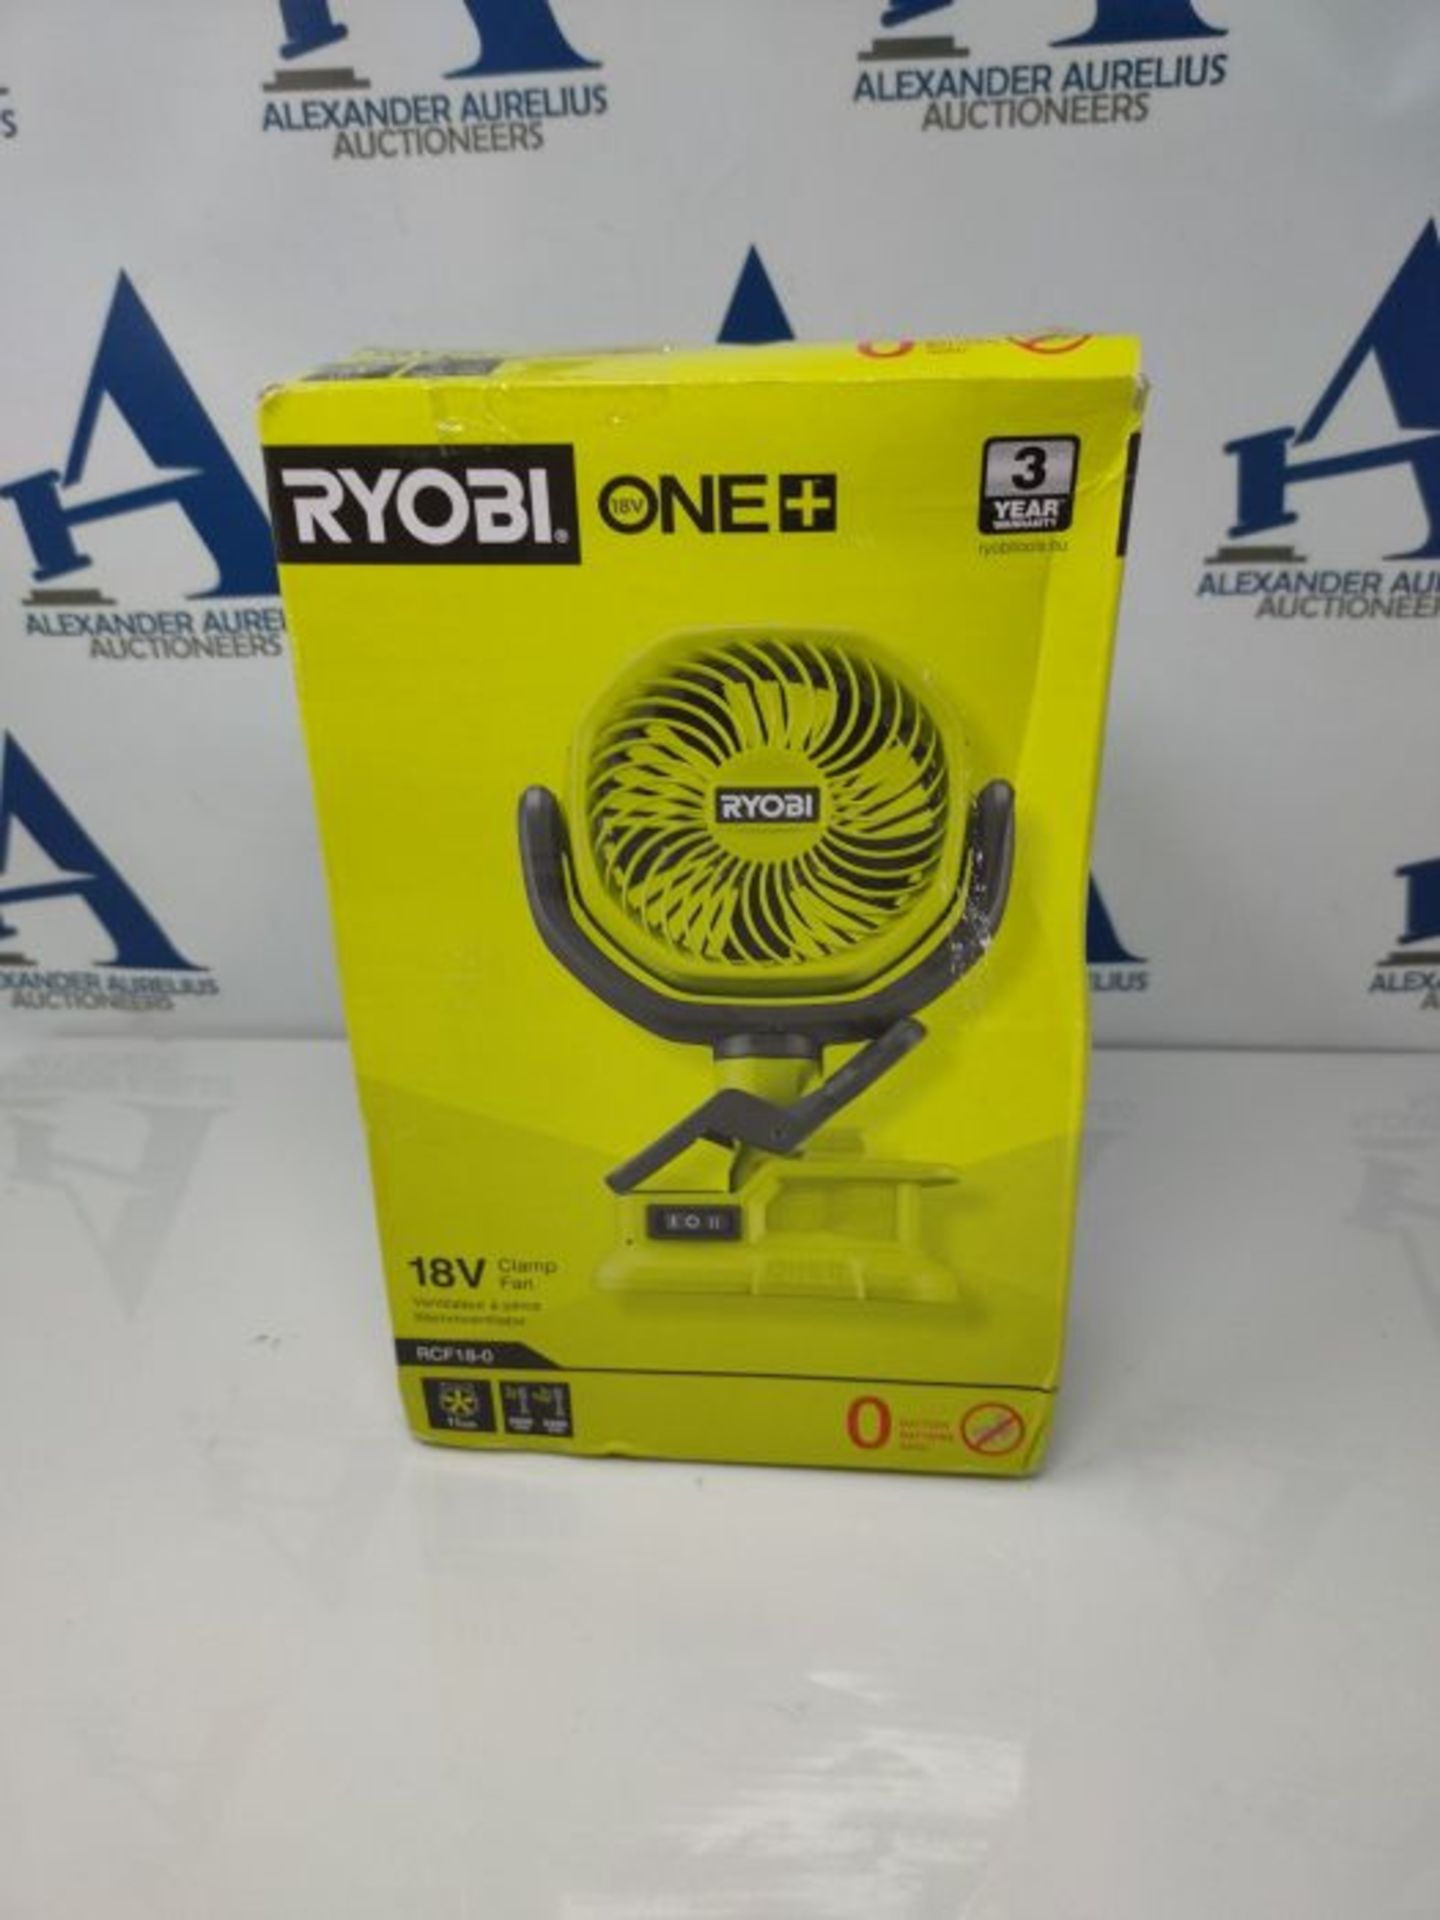 Ryobi RCF18-0 18V ONE+ Cordless 10cm Clamp Fan (Bare Tool) Hyper Green - Image 2 of 3